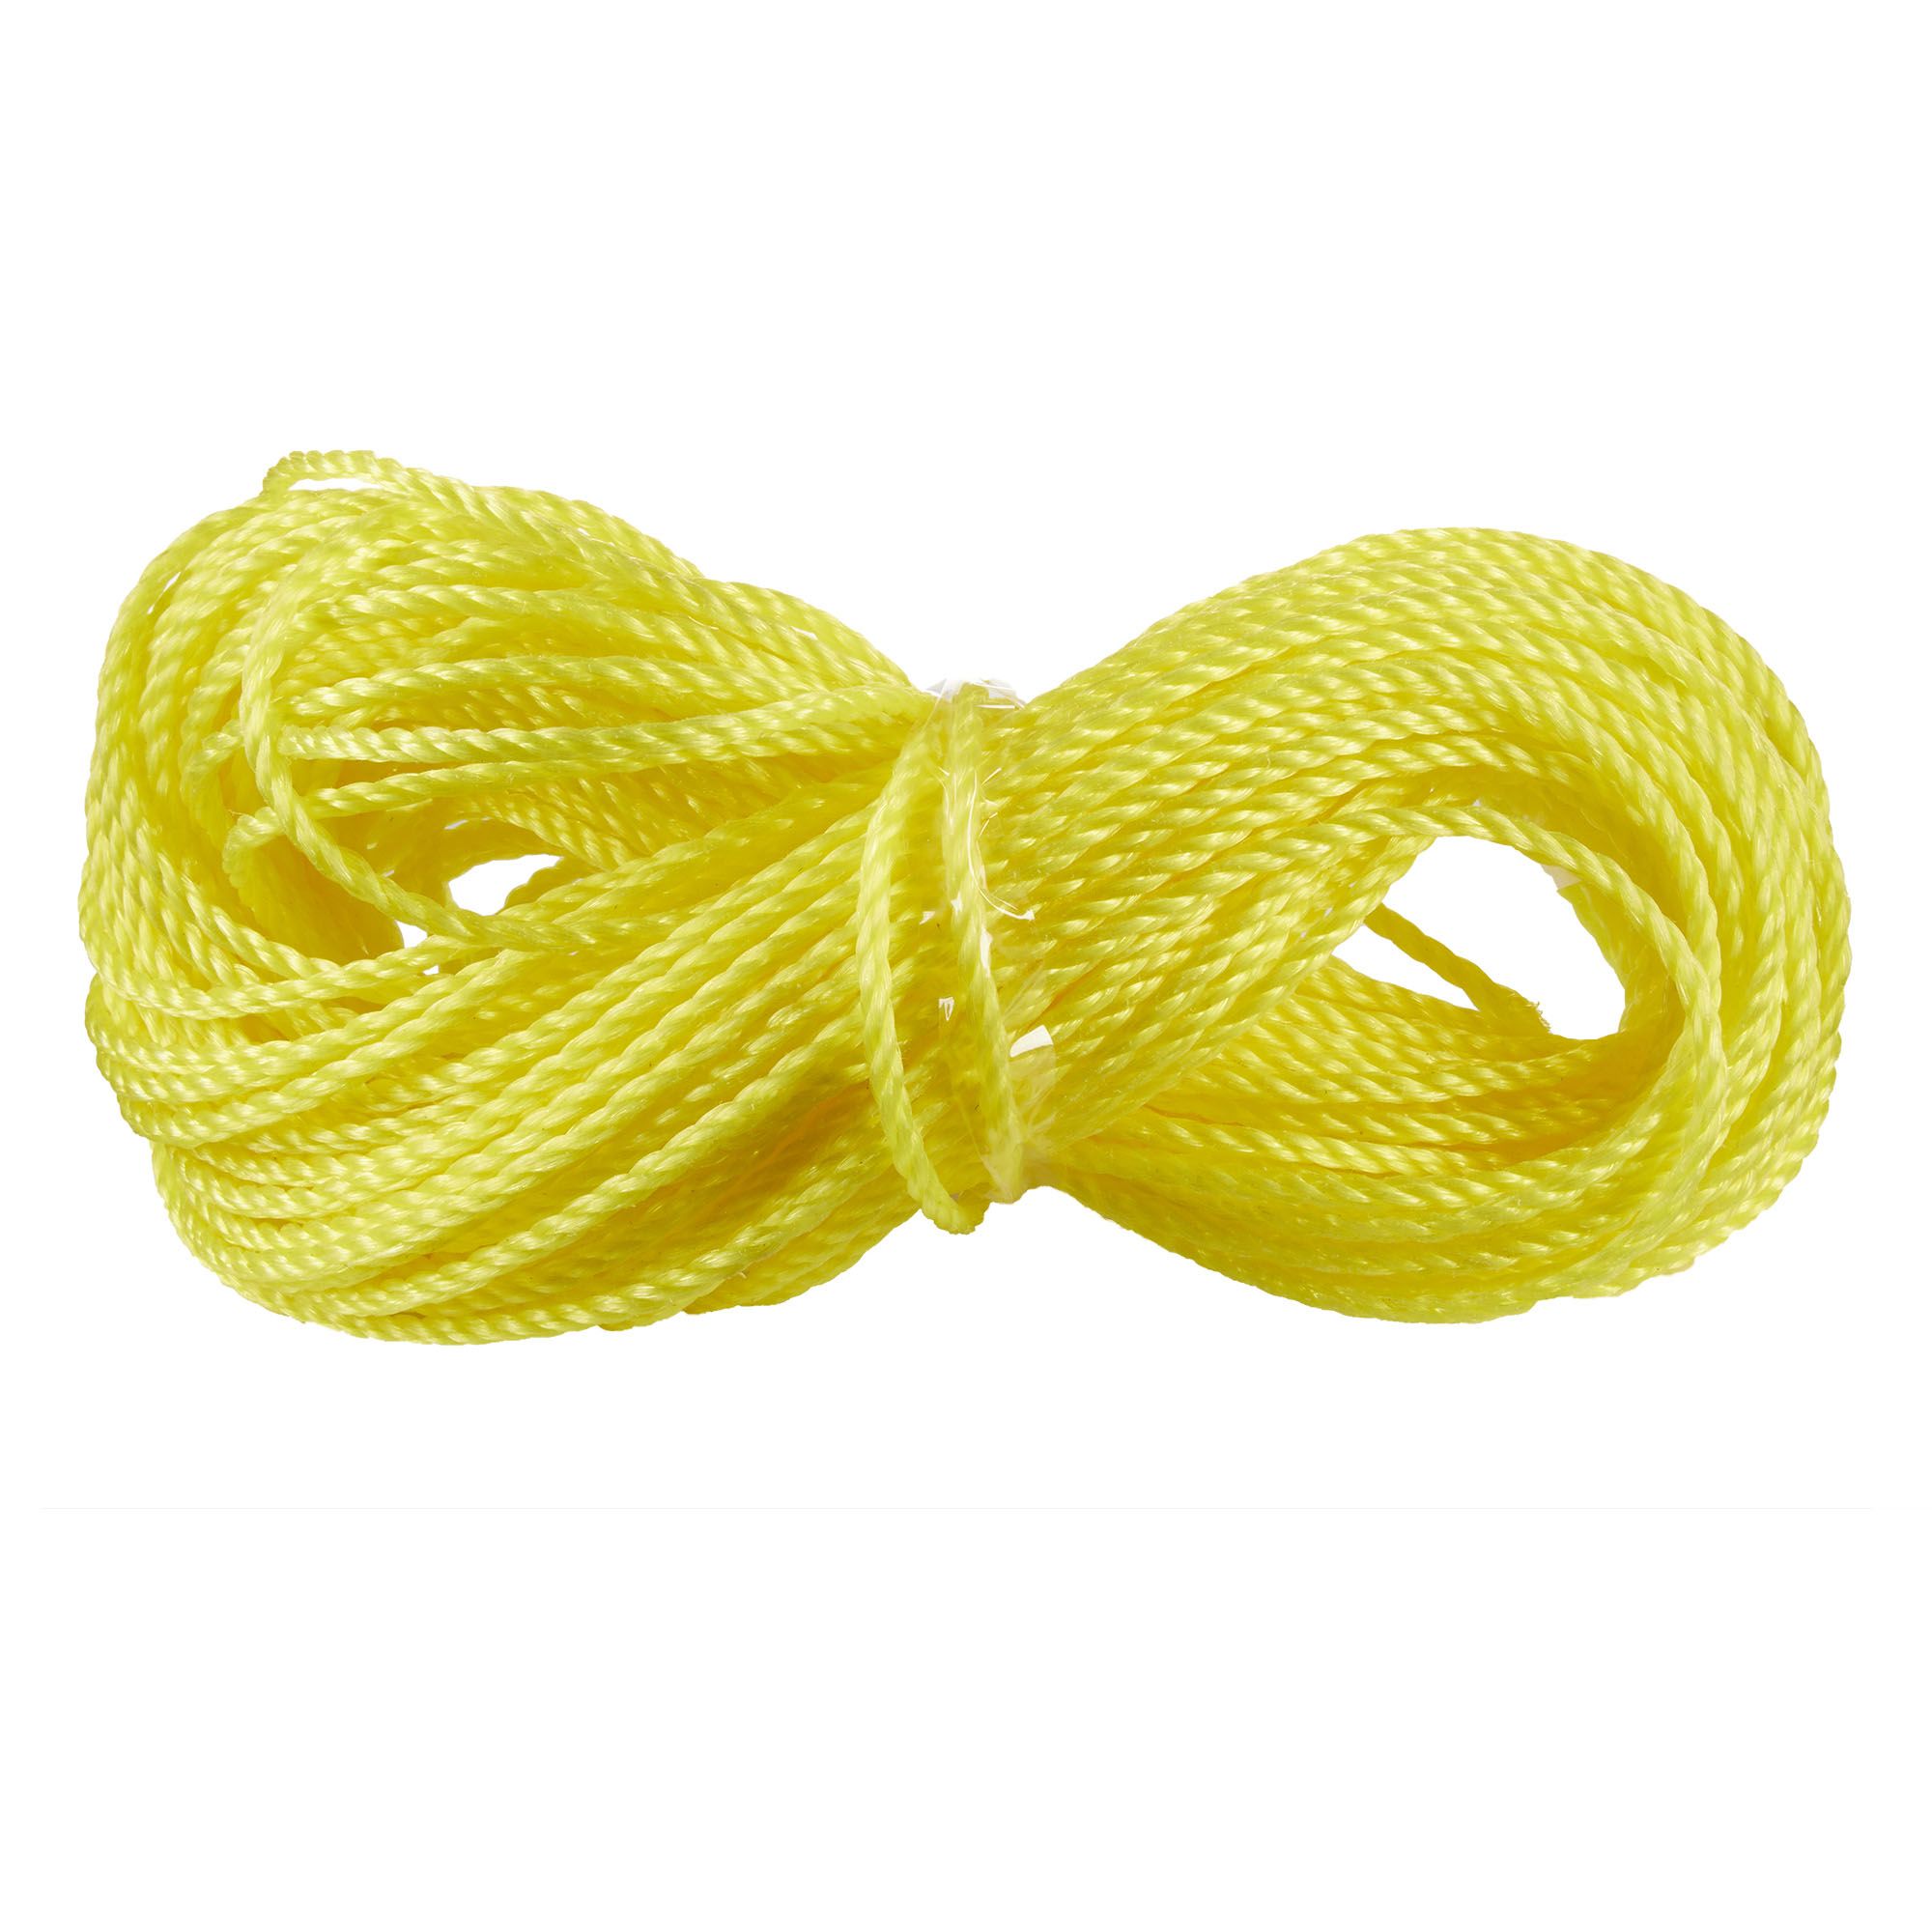 100 feet of yellow rope